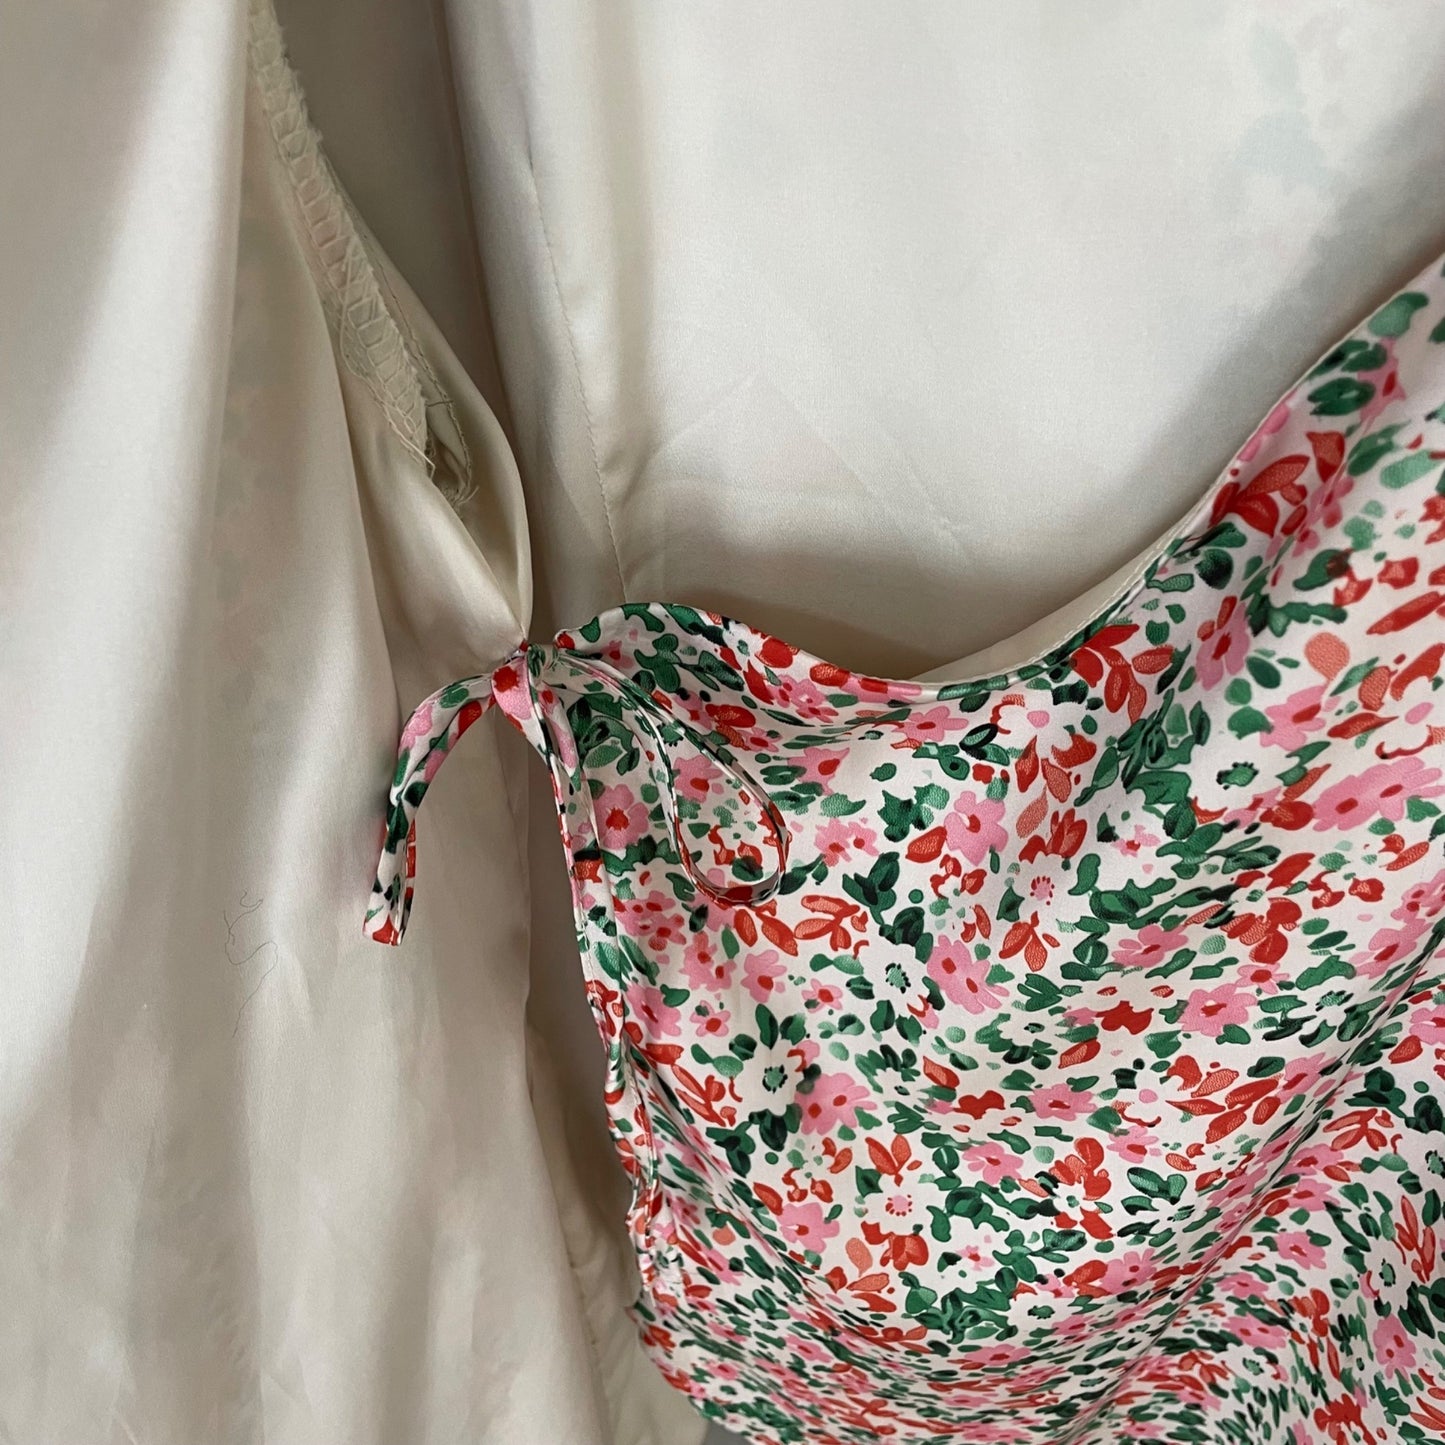 Vici Floral Ruffle Sleeve Tie Wrap Dress Womens Size Medium Romantic Cottagecore